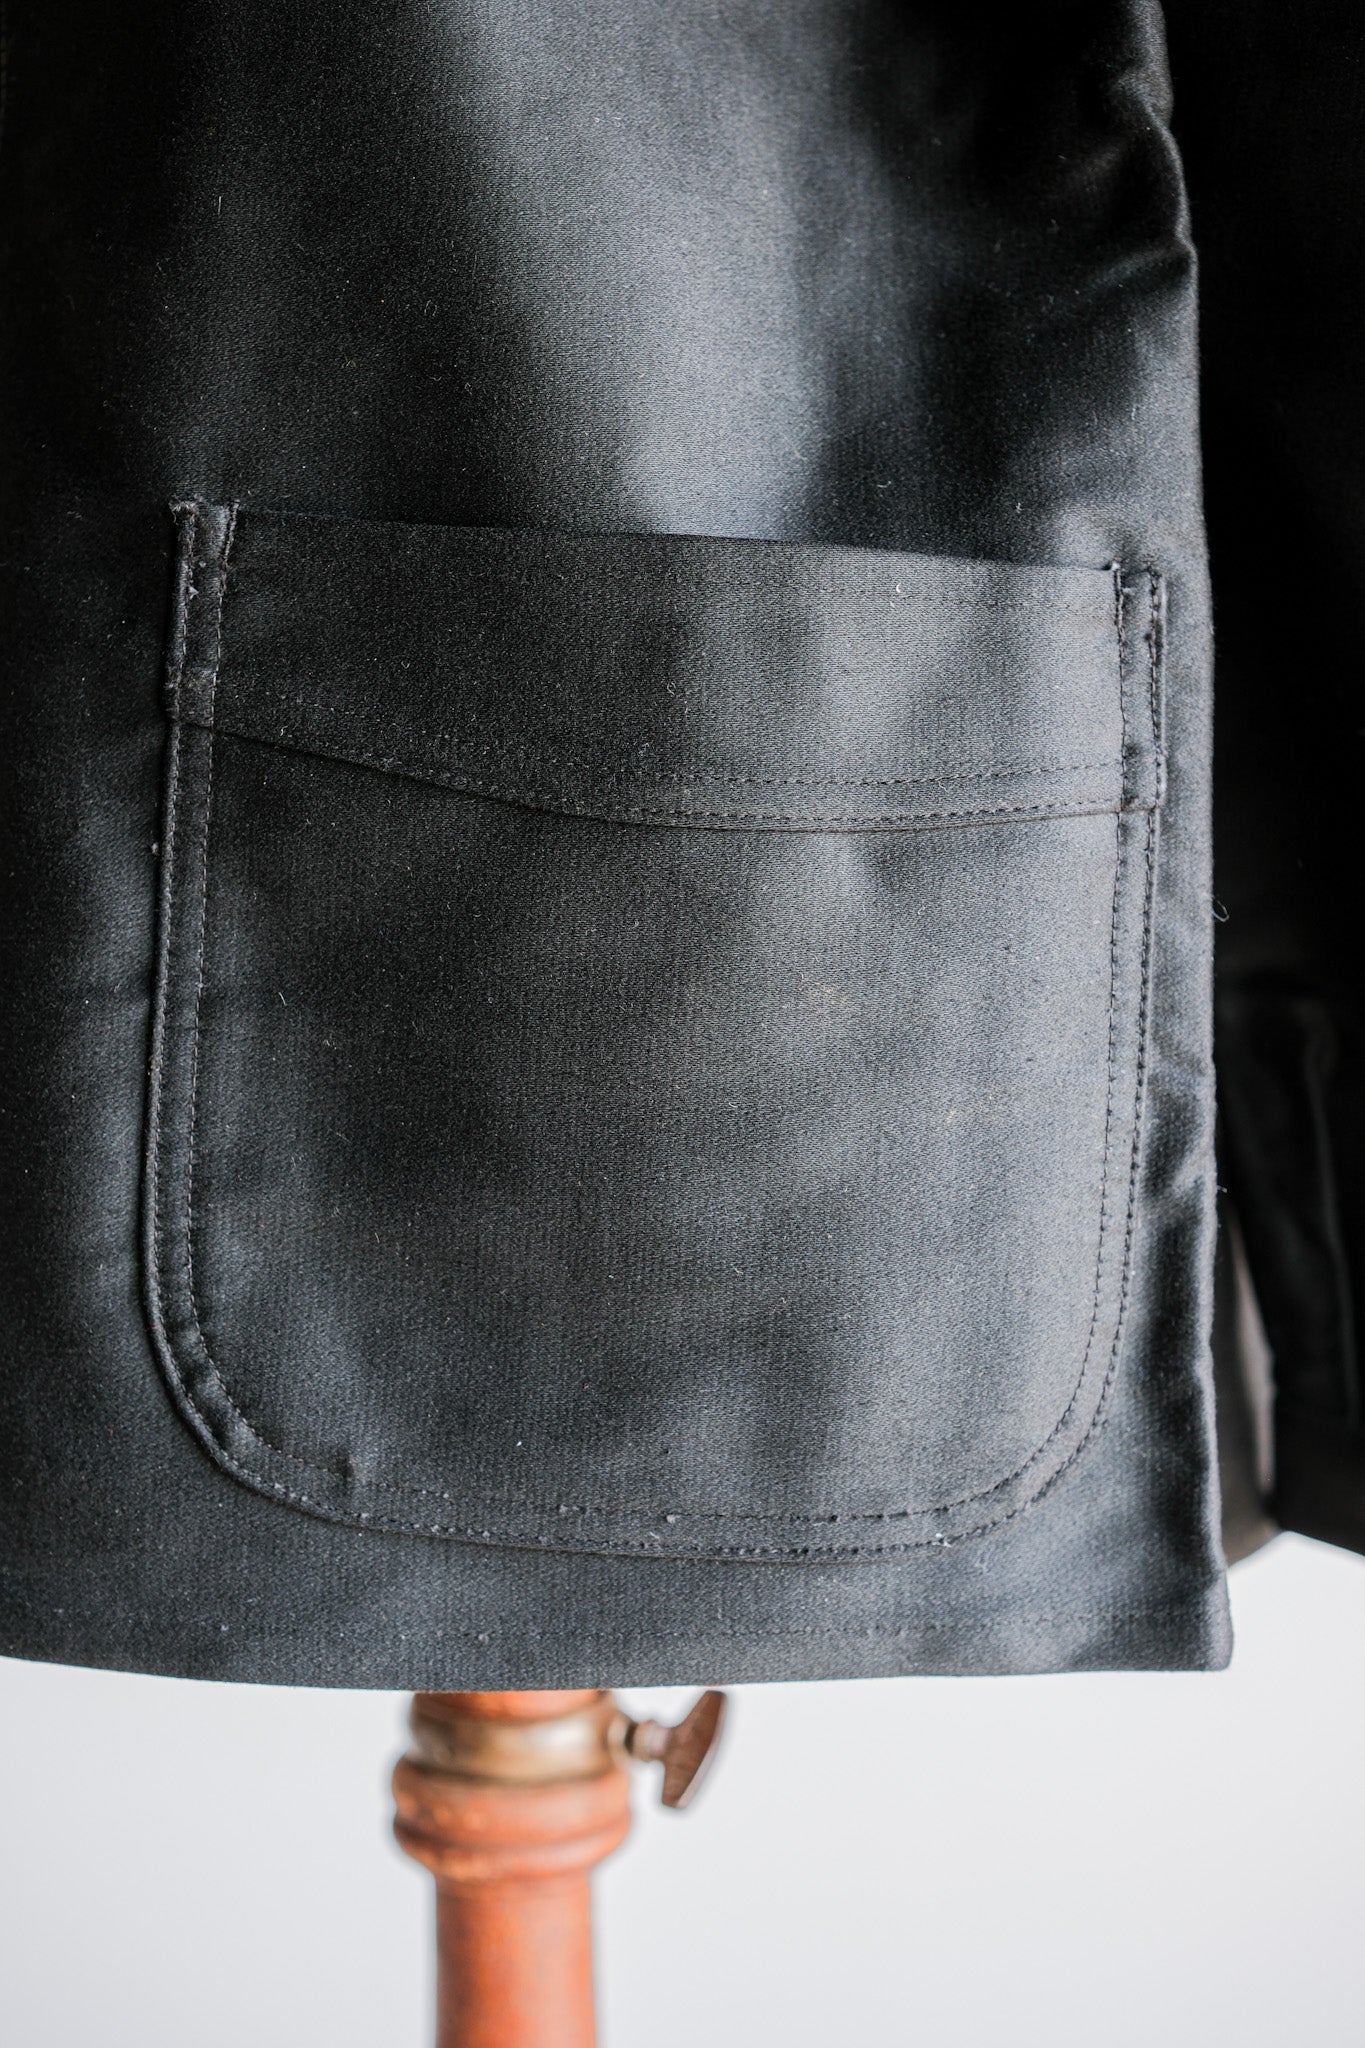 [~ 50's] French Vintage Black Moleskin Work Jacket Size.52 "Le Mont Stock Michel" "Dead Stock"